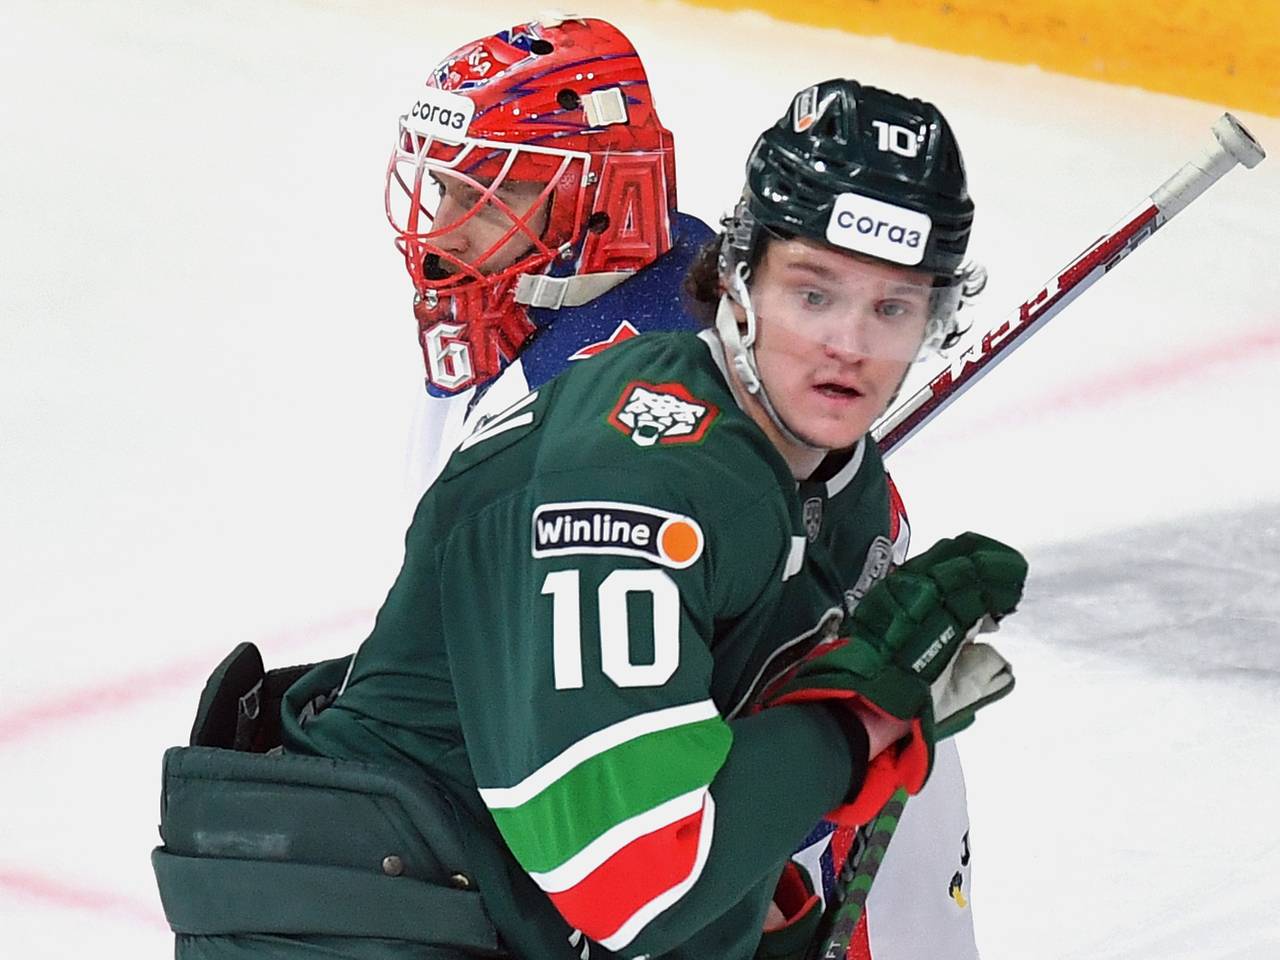 Дмитрий воронков хоккеист ак барс фото